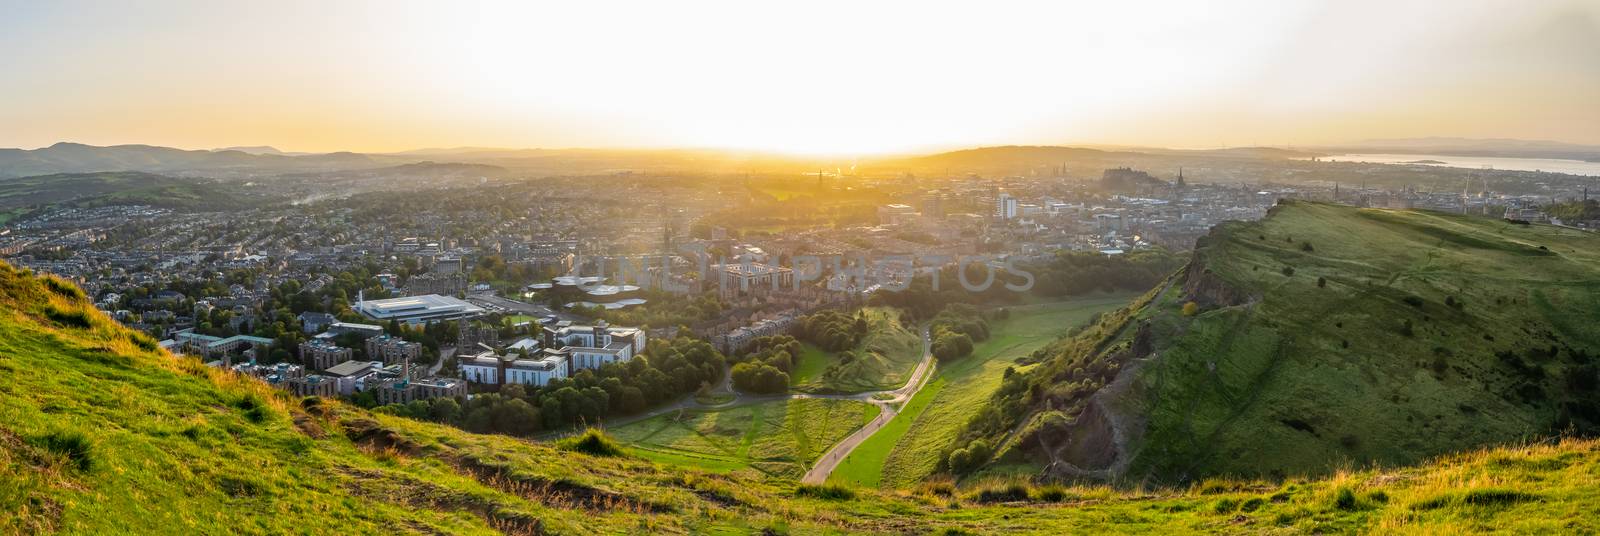 Panorama Of Edinburgh Cityscape At Sunset by mrdoomits